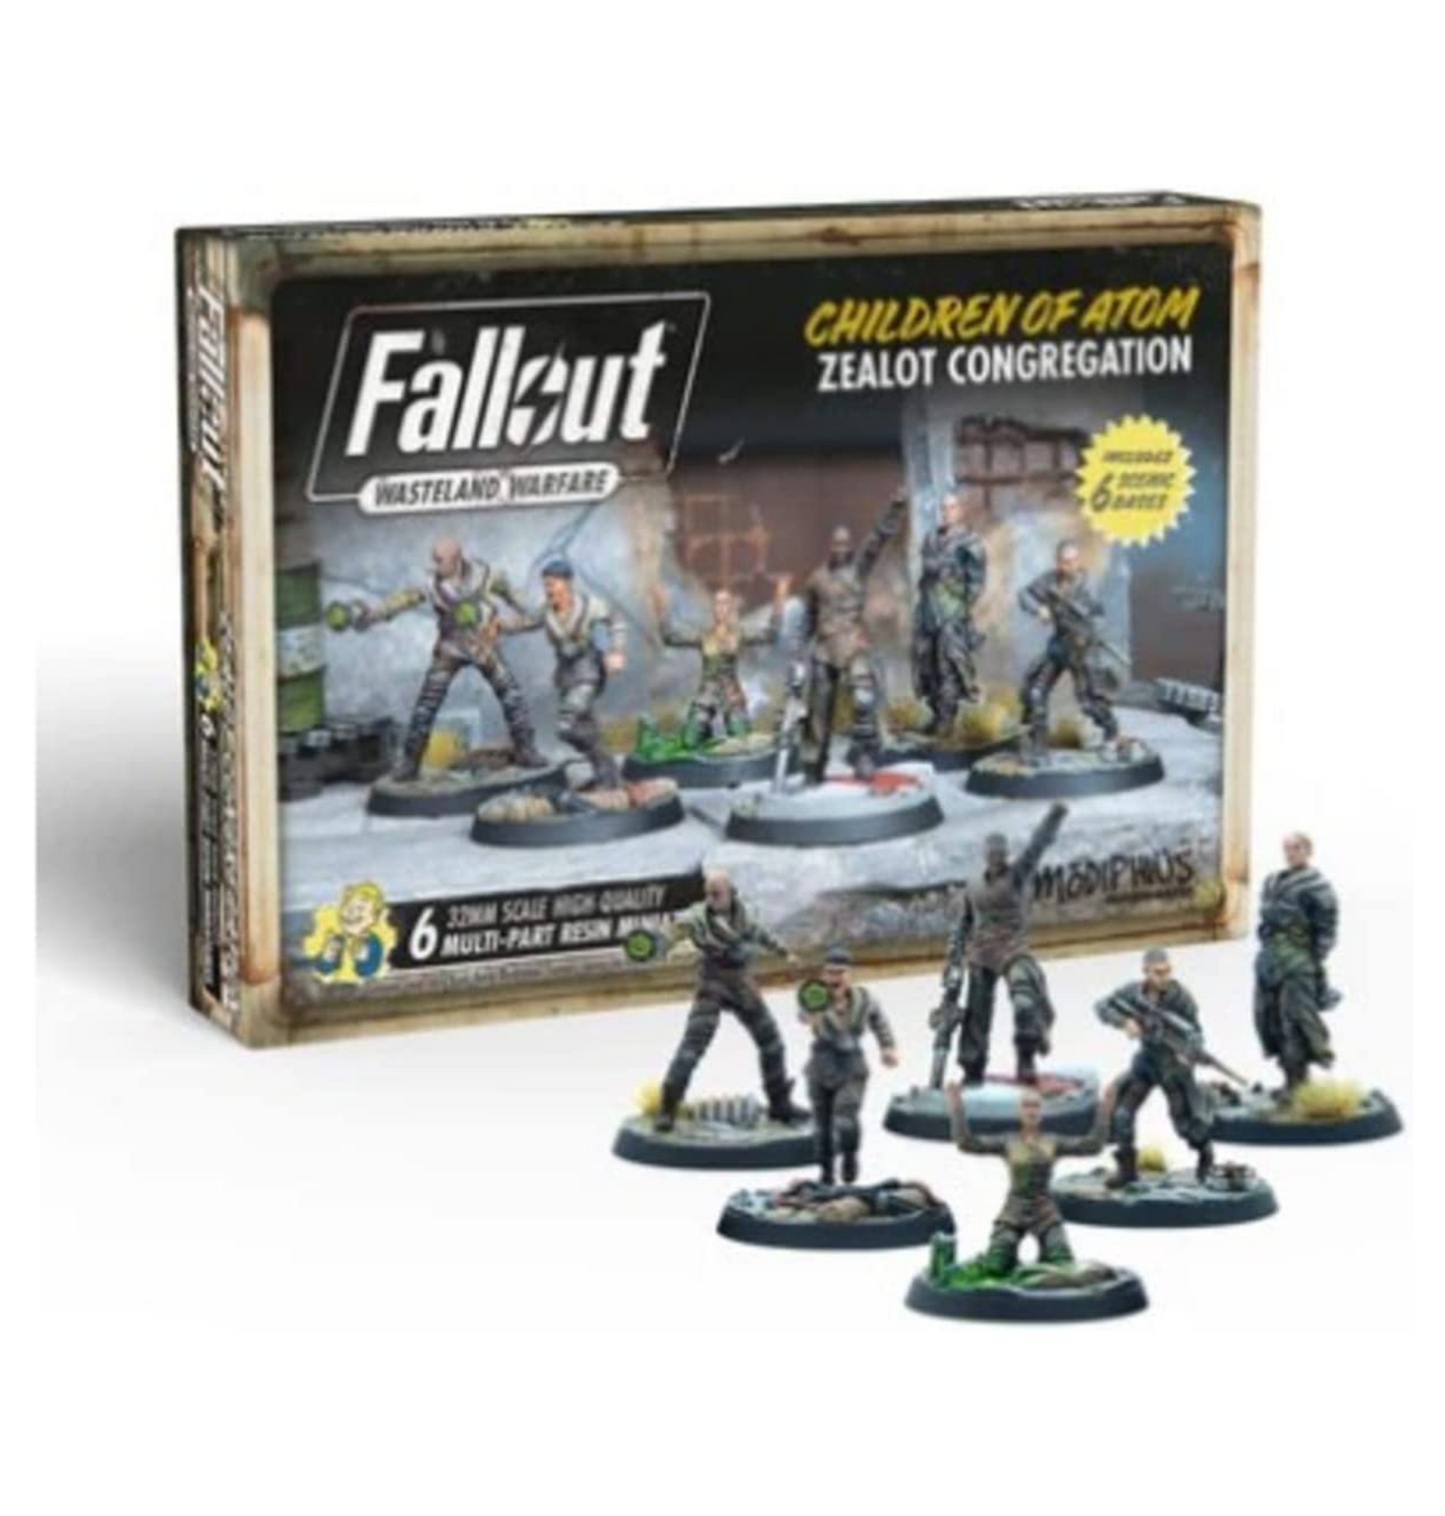 Fallout Wasteland Warfare: Children of Atom Zealot Congregation